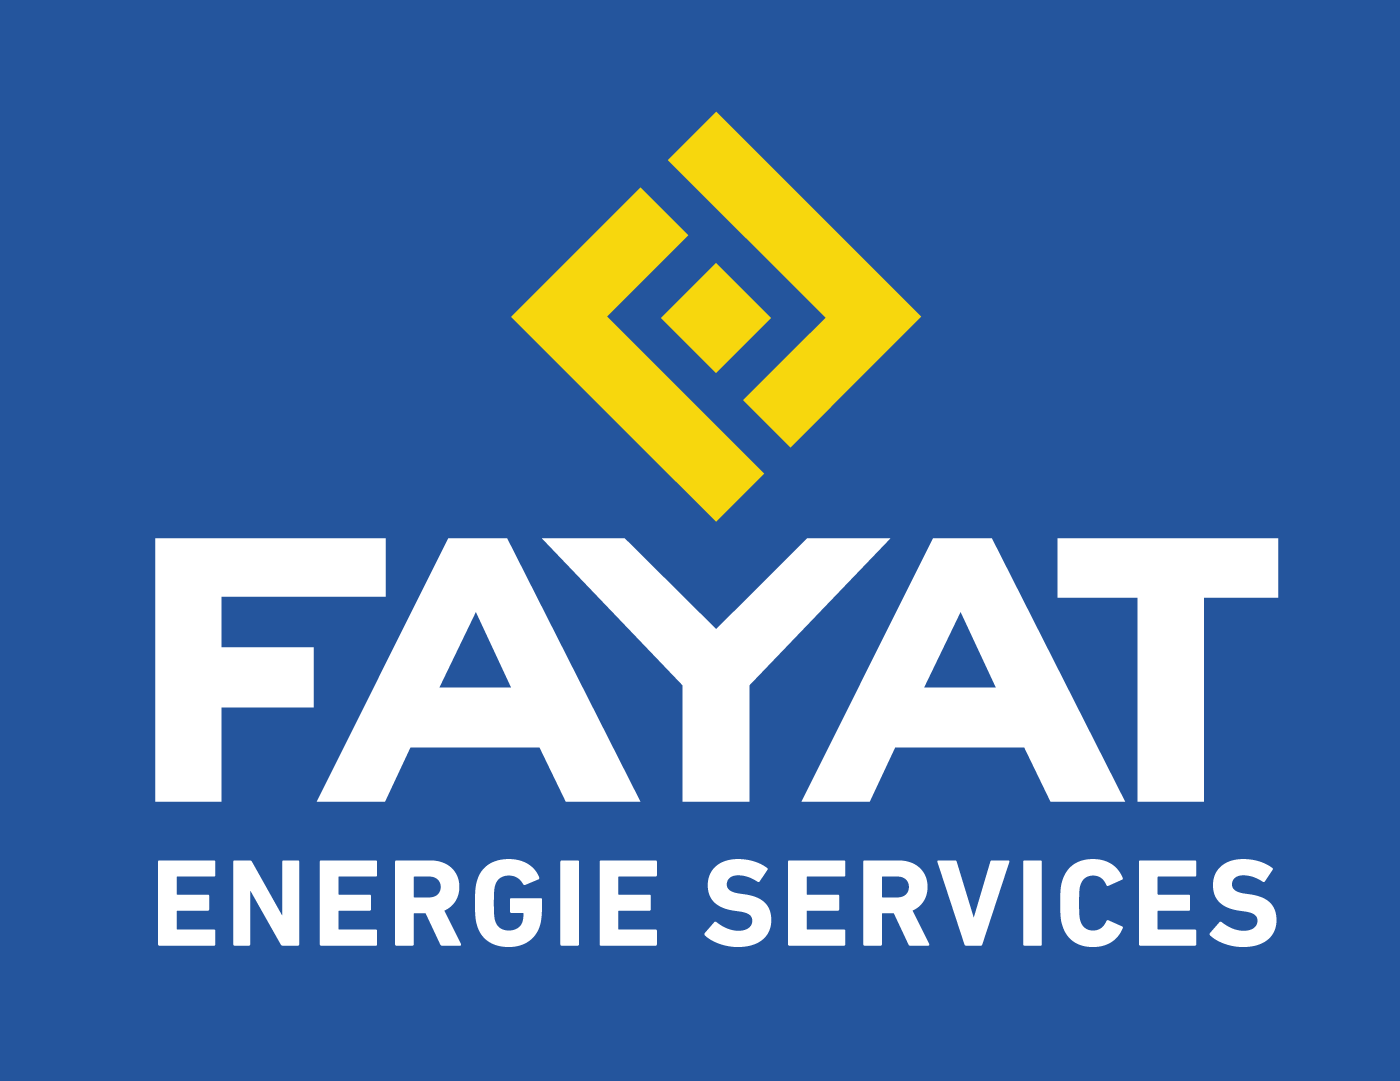 fayat-energie-services.png